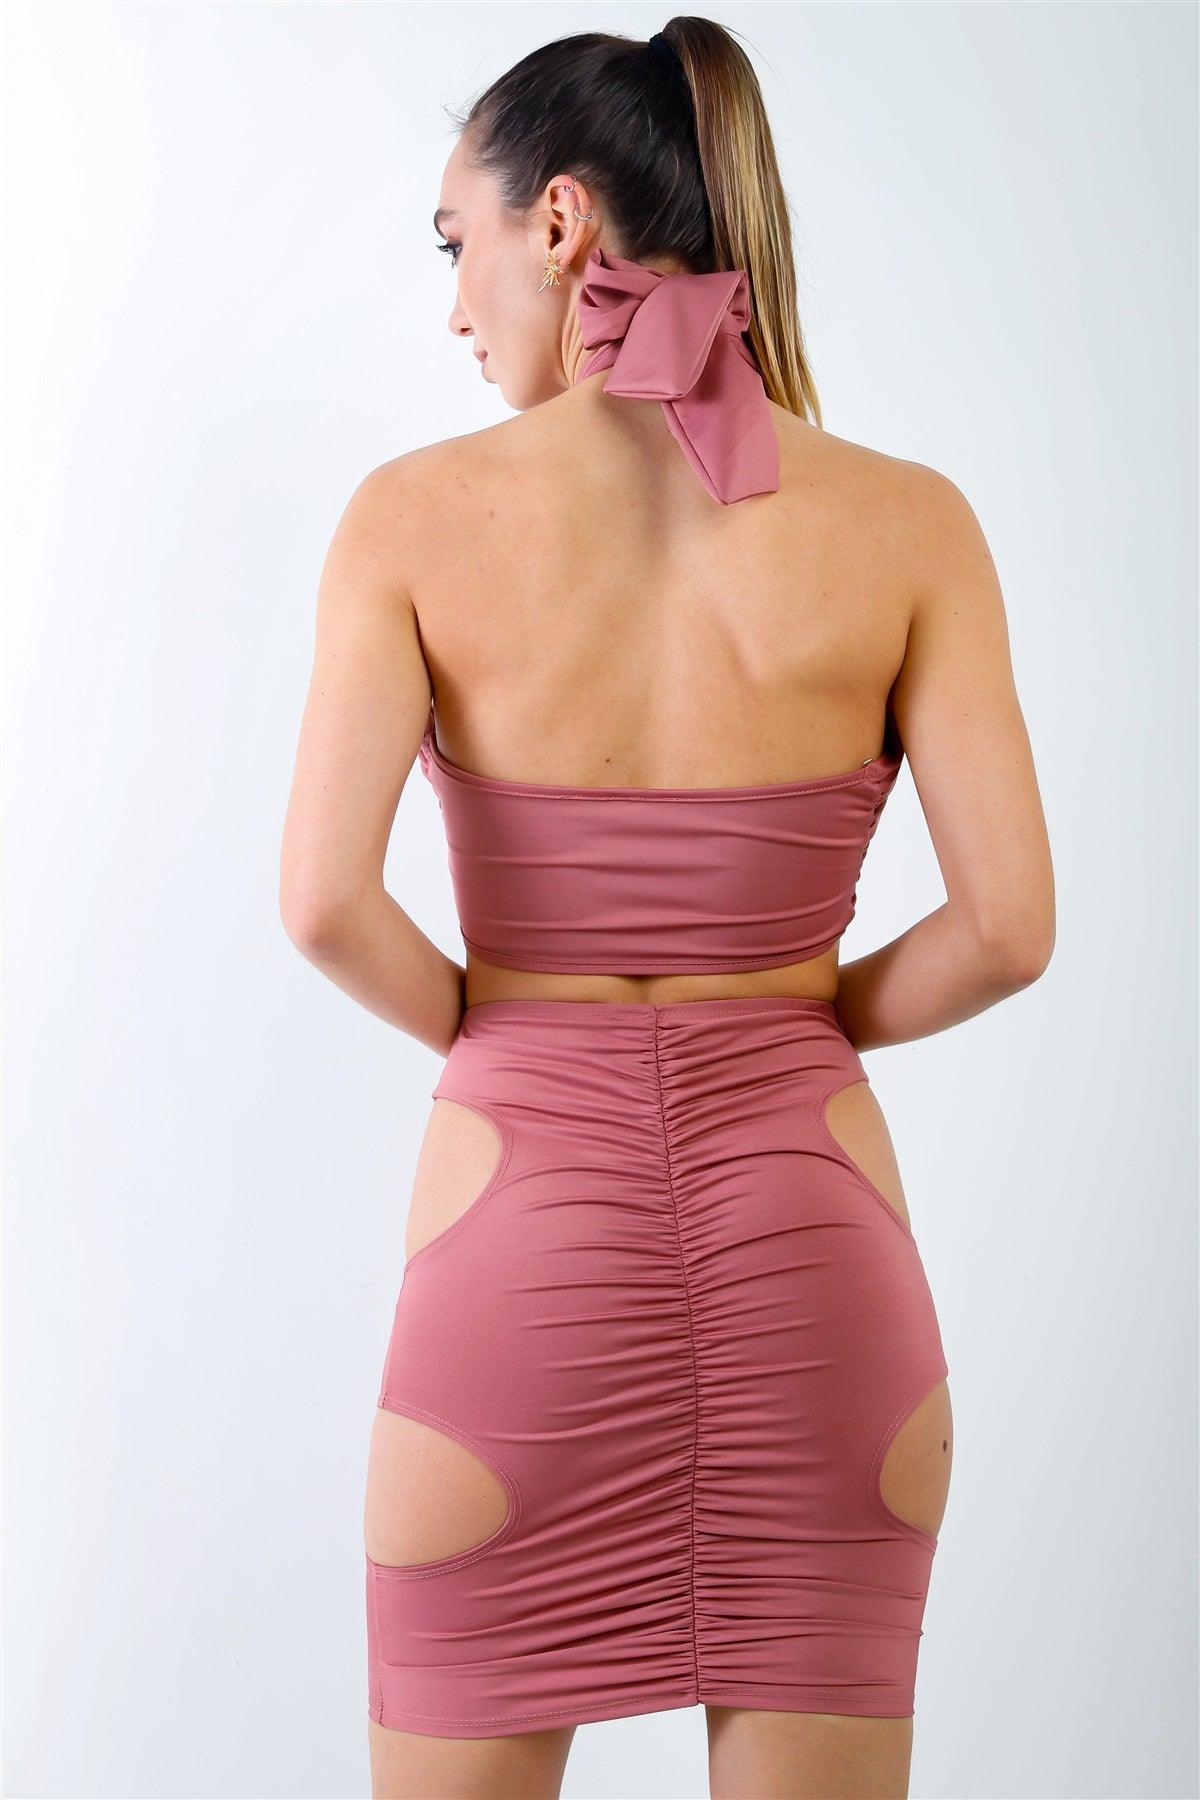 Rose Wraparound Halter Top & Ruched Side Cut-Out Details Skirt Set /1-2-2